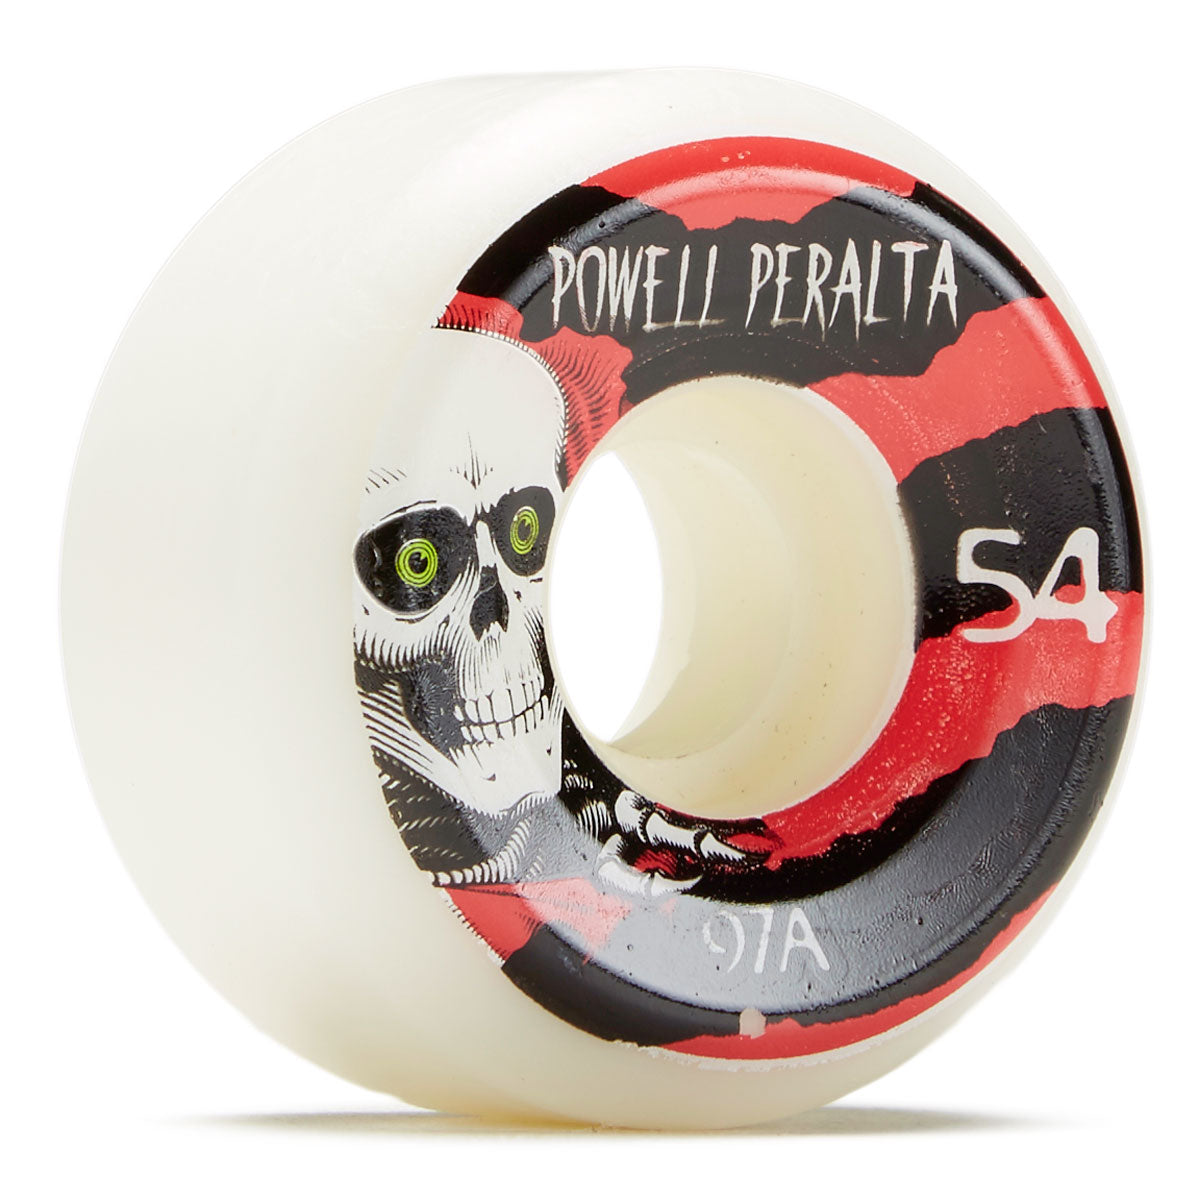 Powell Peralta Ripper 4 97A Skateboard Wheels - White - 54mm image 1